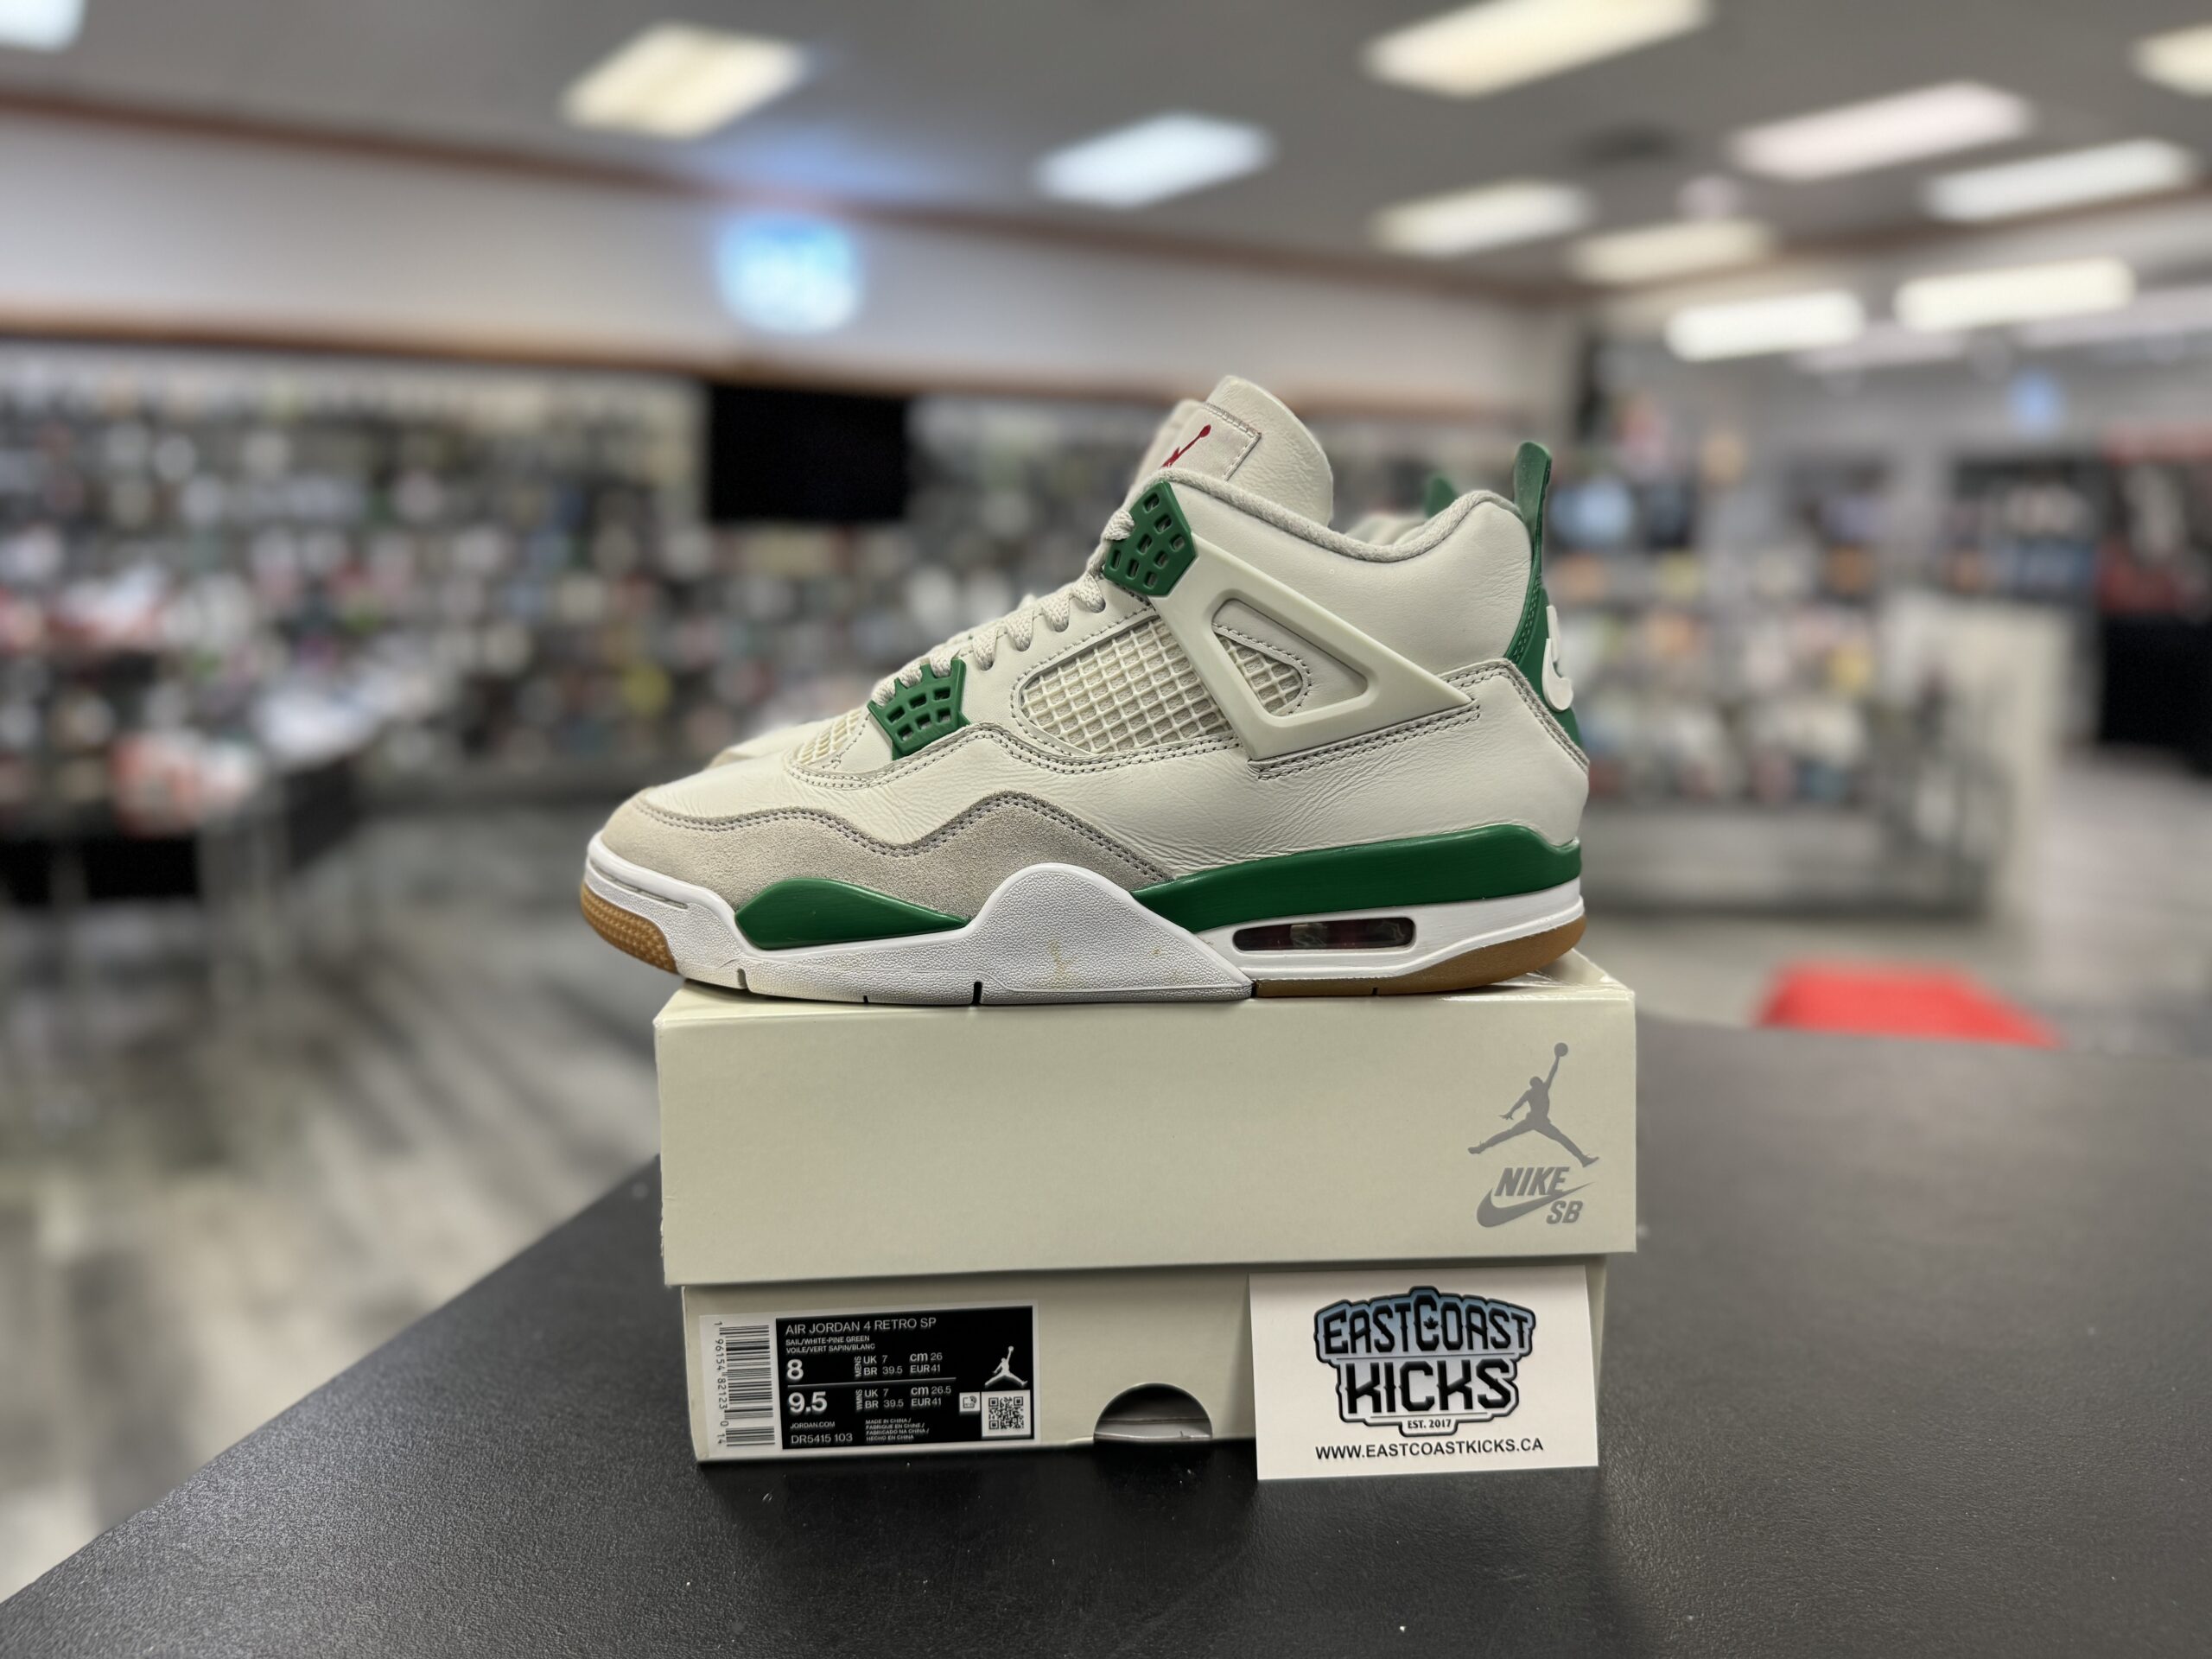 Preowned Jordan 4 Retro SB Pine Green Size 8